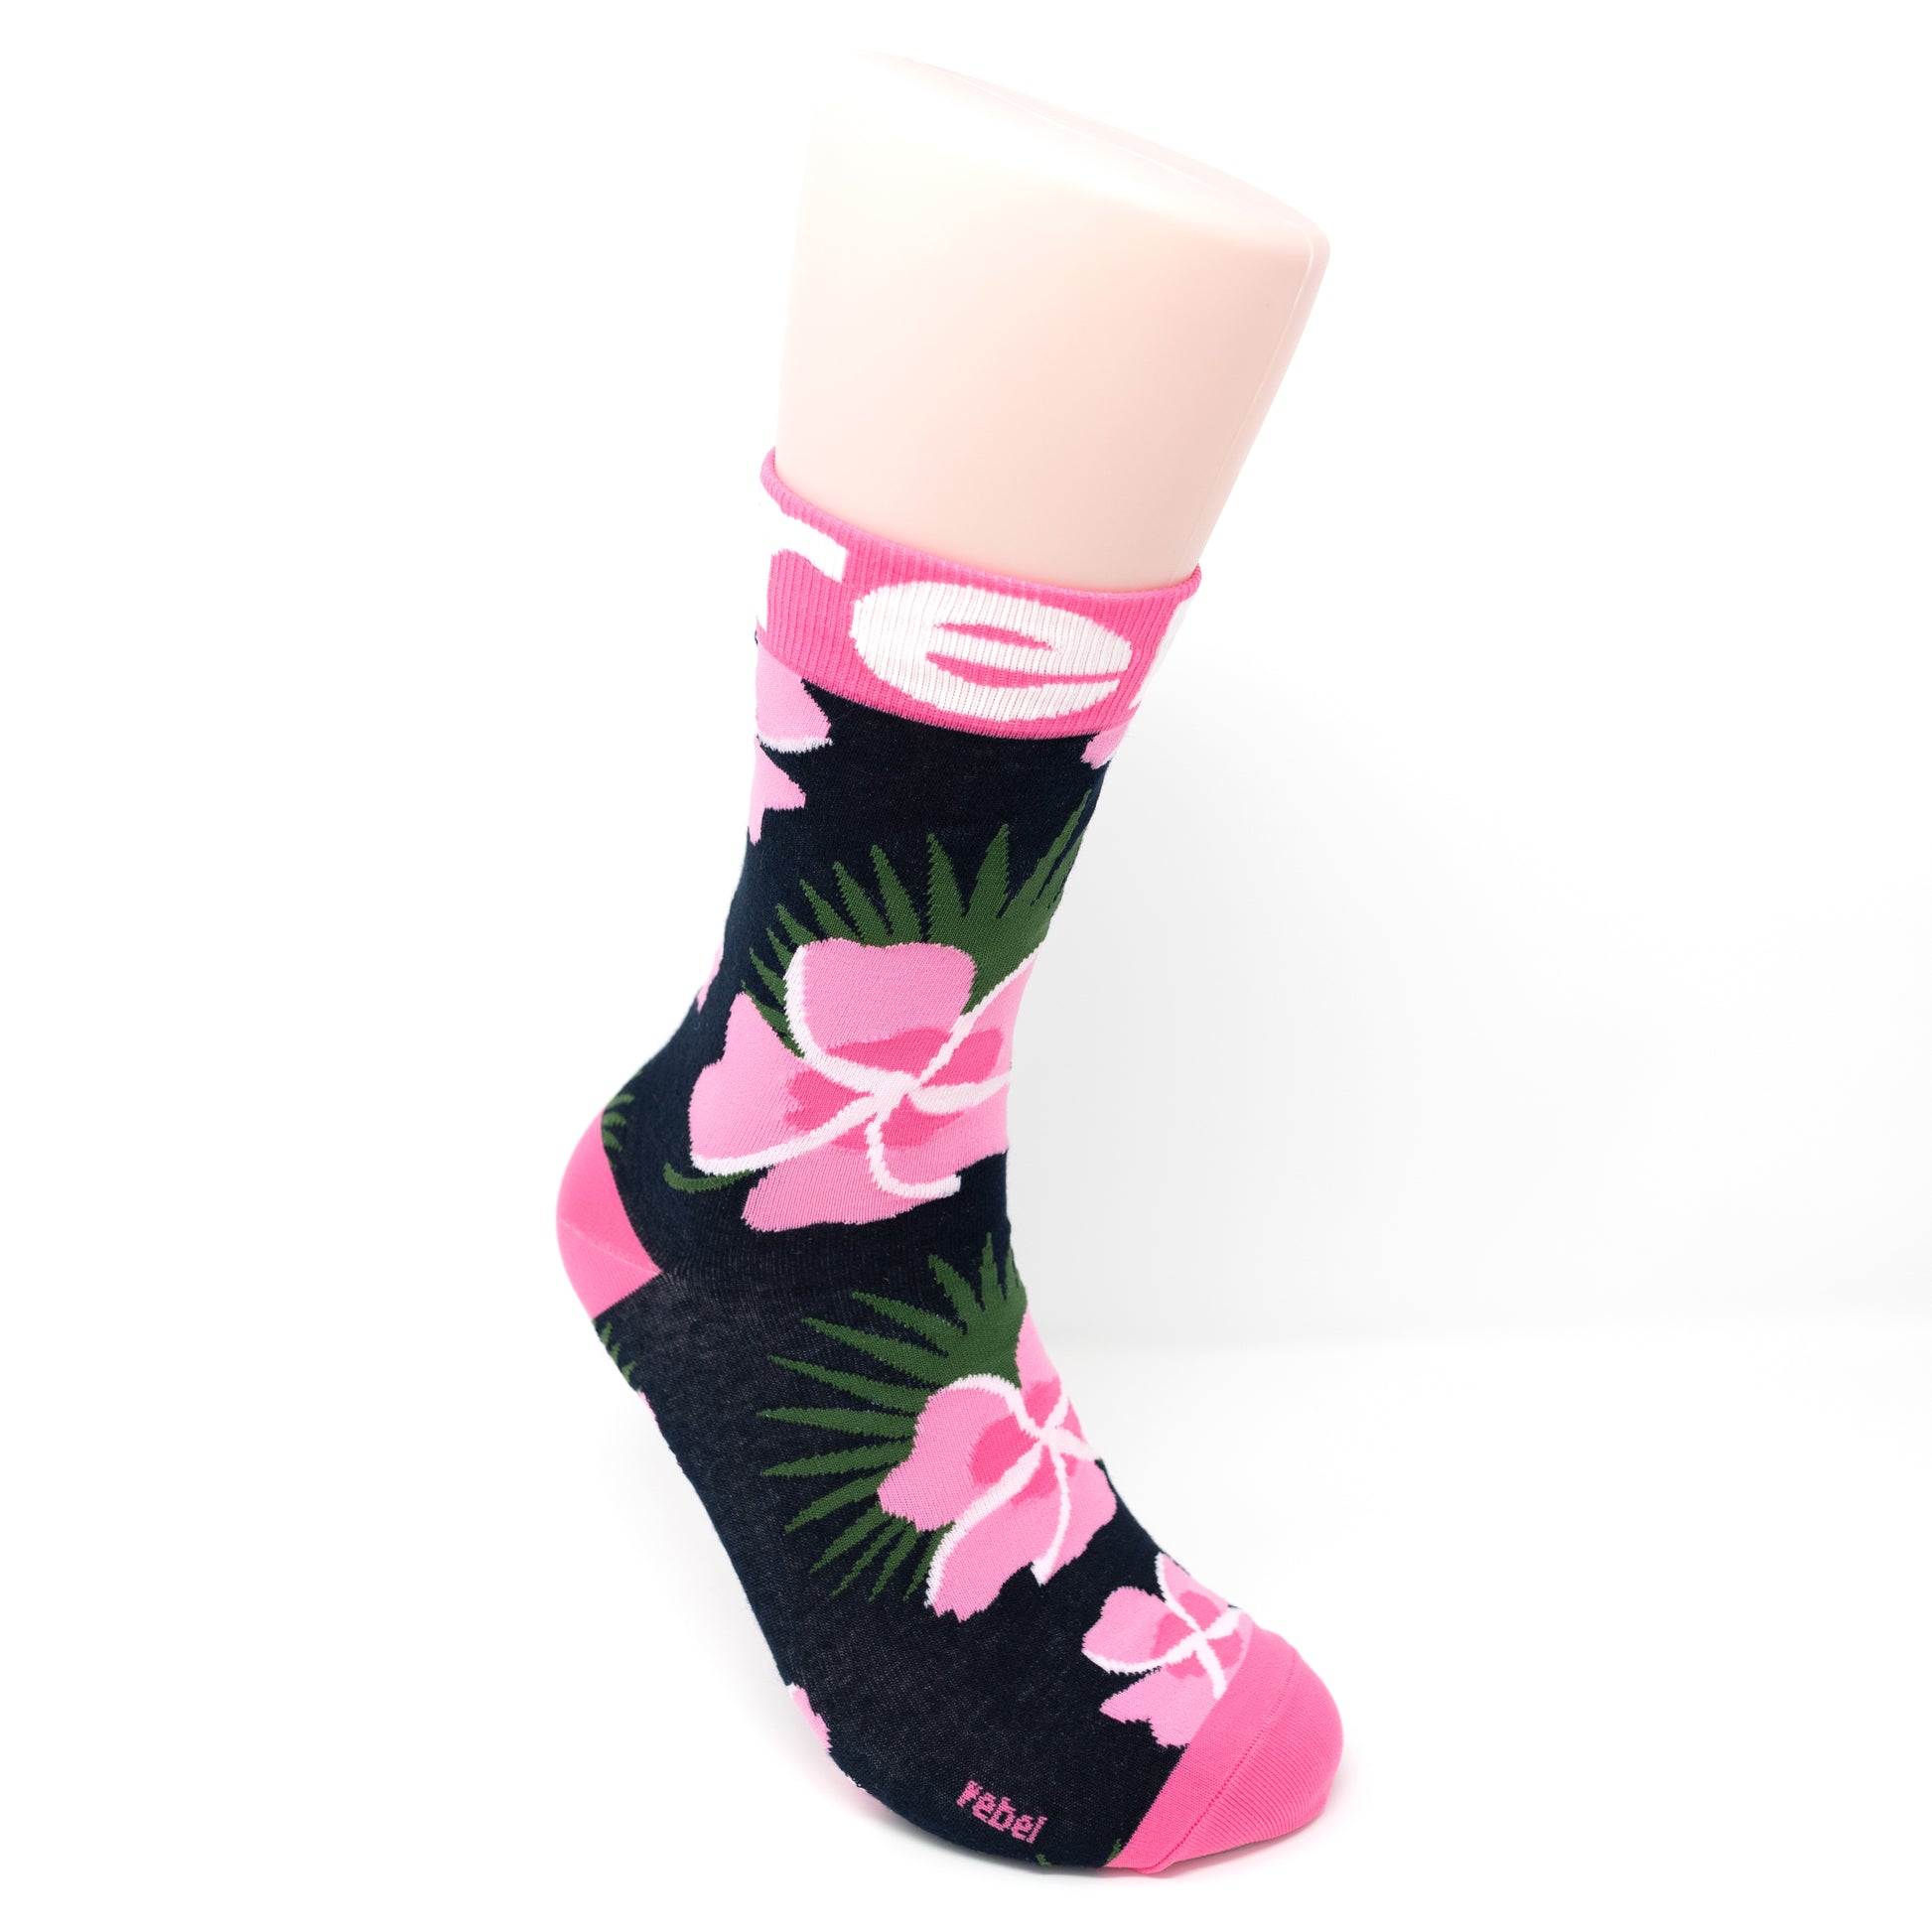 Rebel Fashion's Tropical Flower Socks